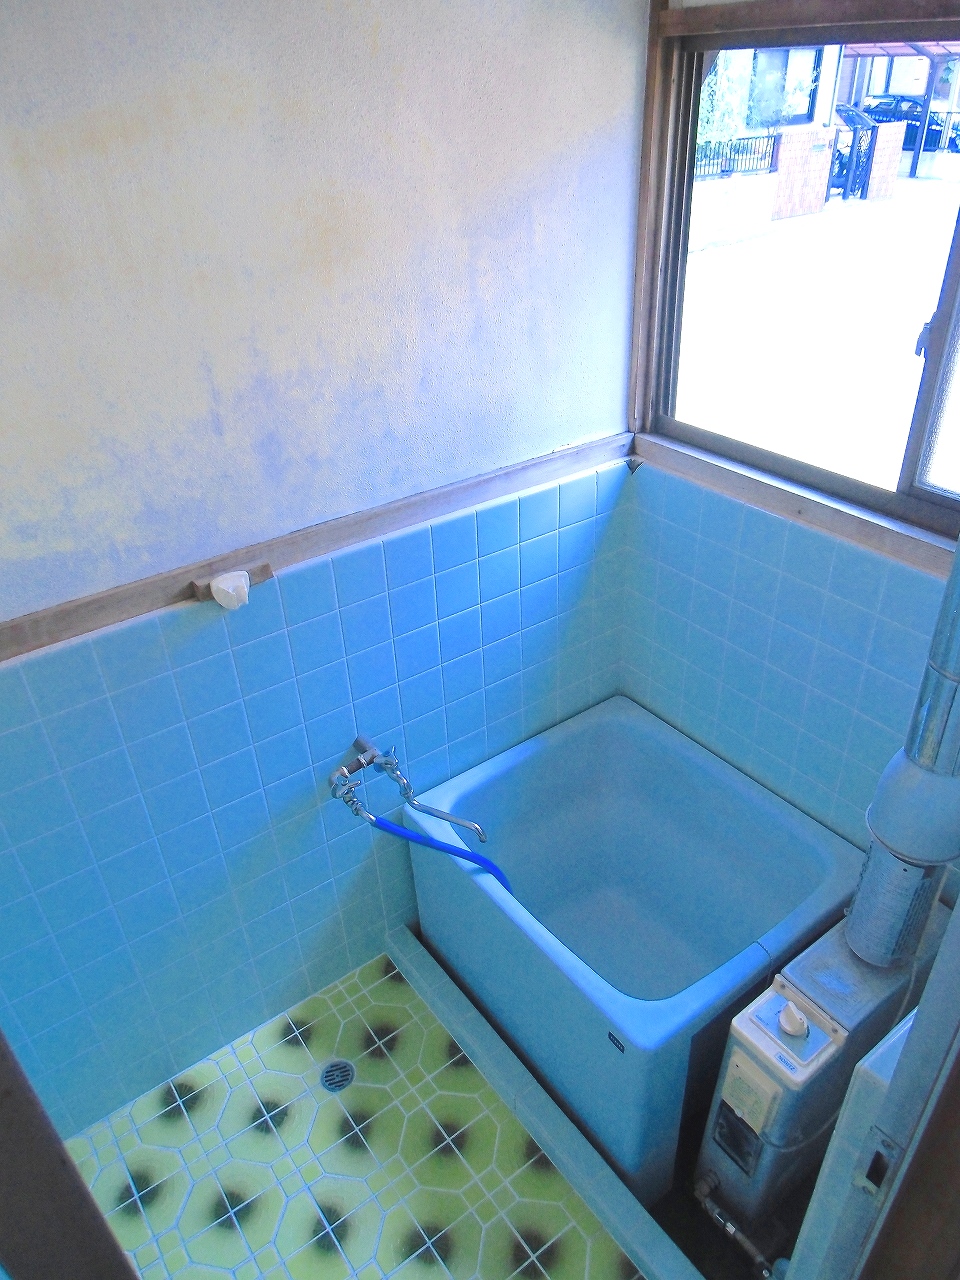 Bath. It is a bathroom with a small window